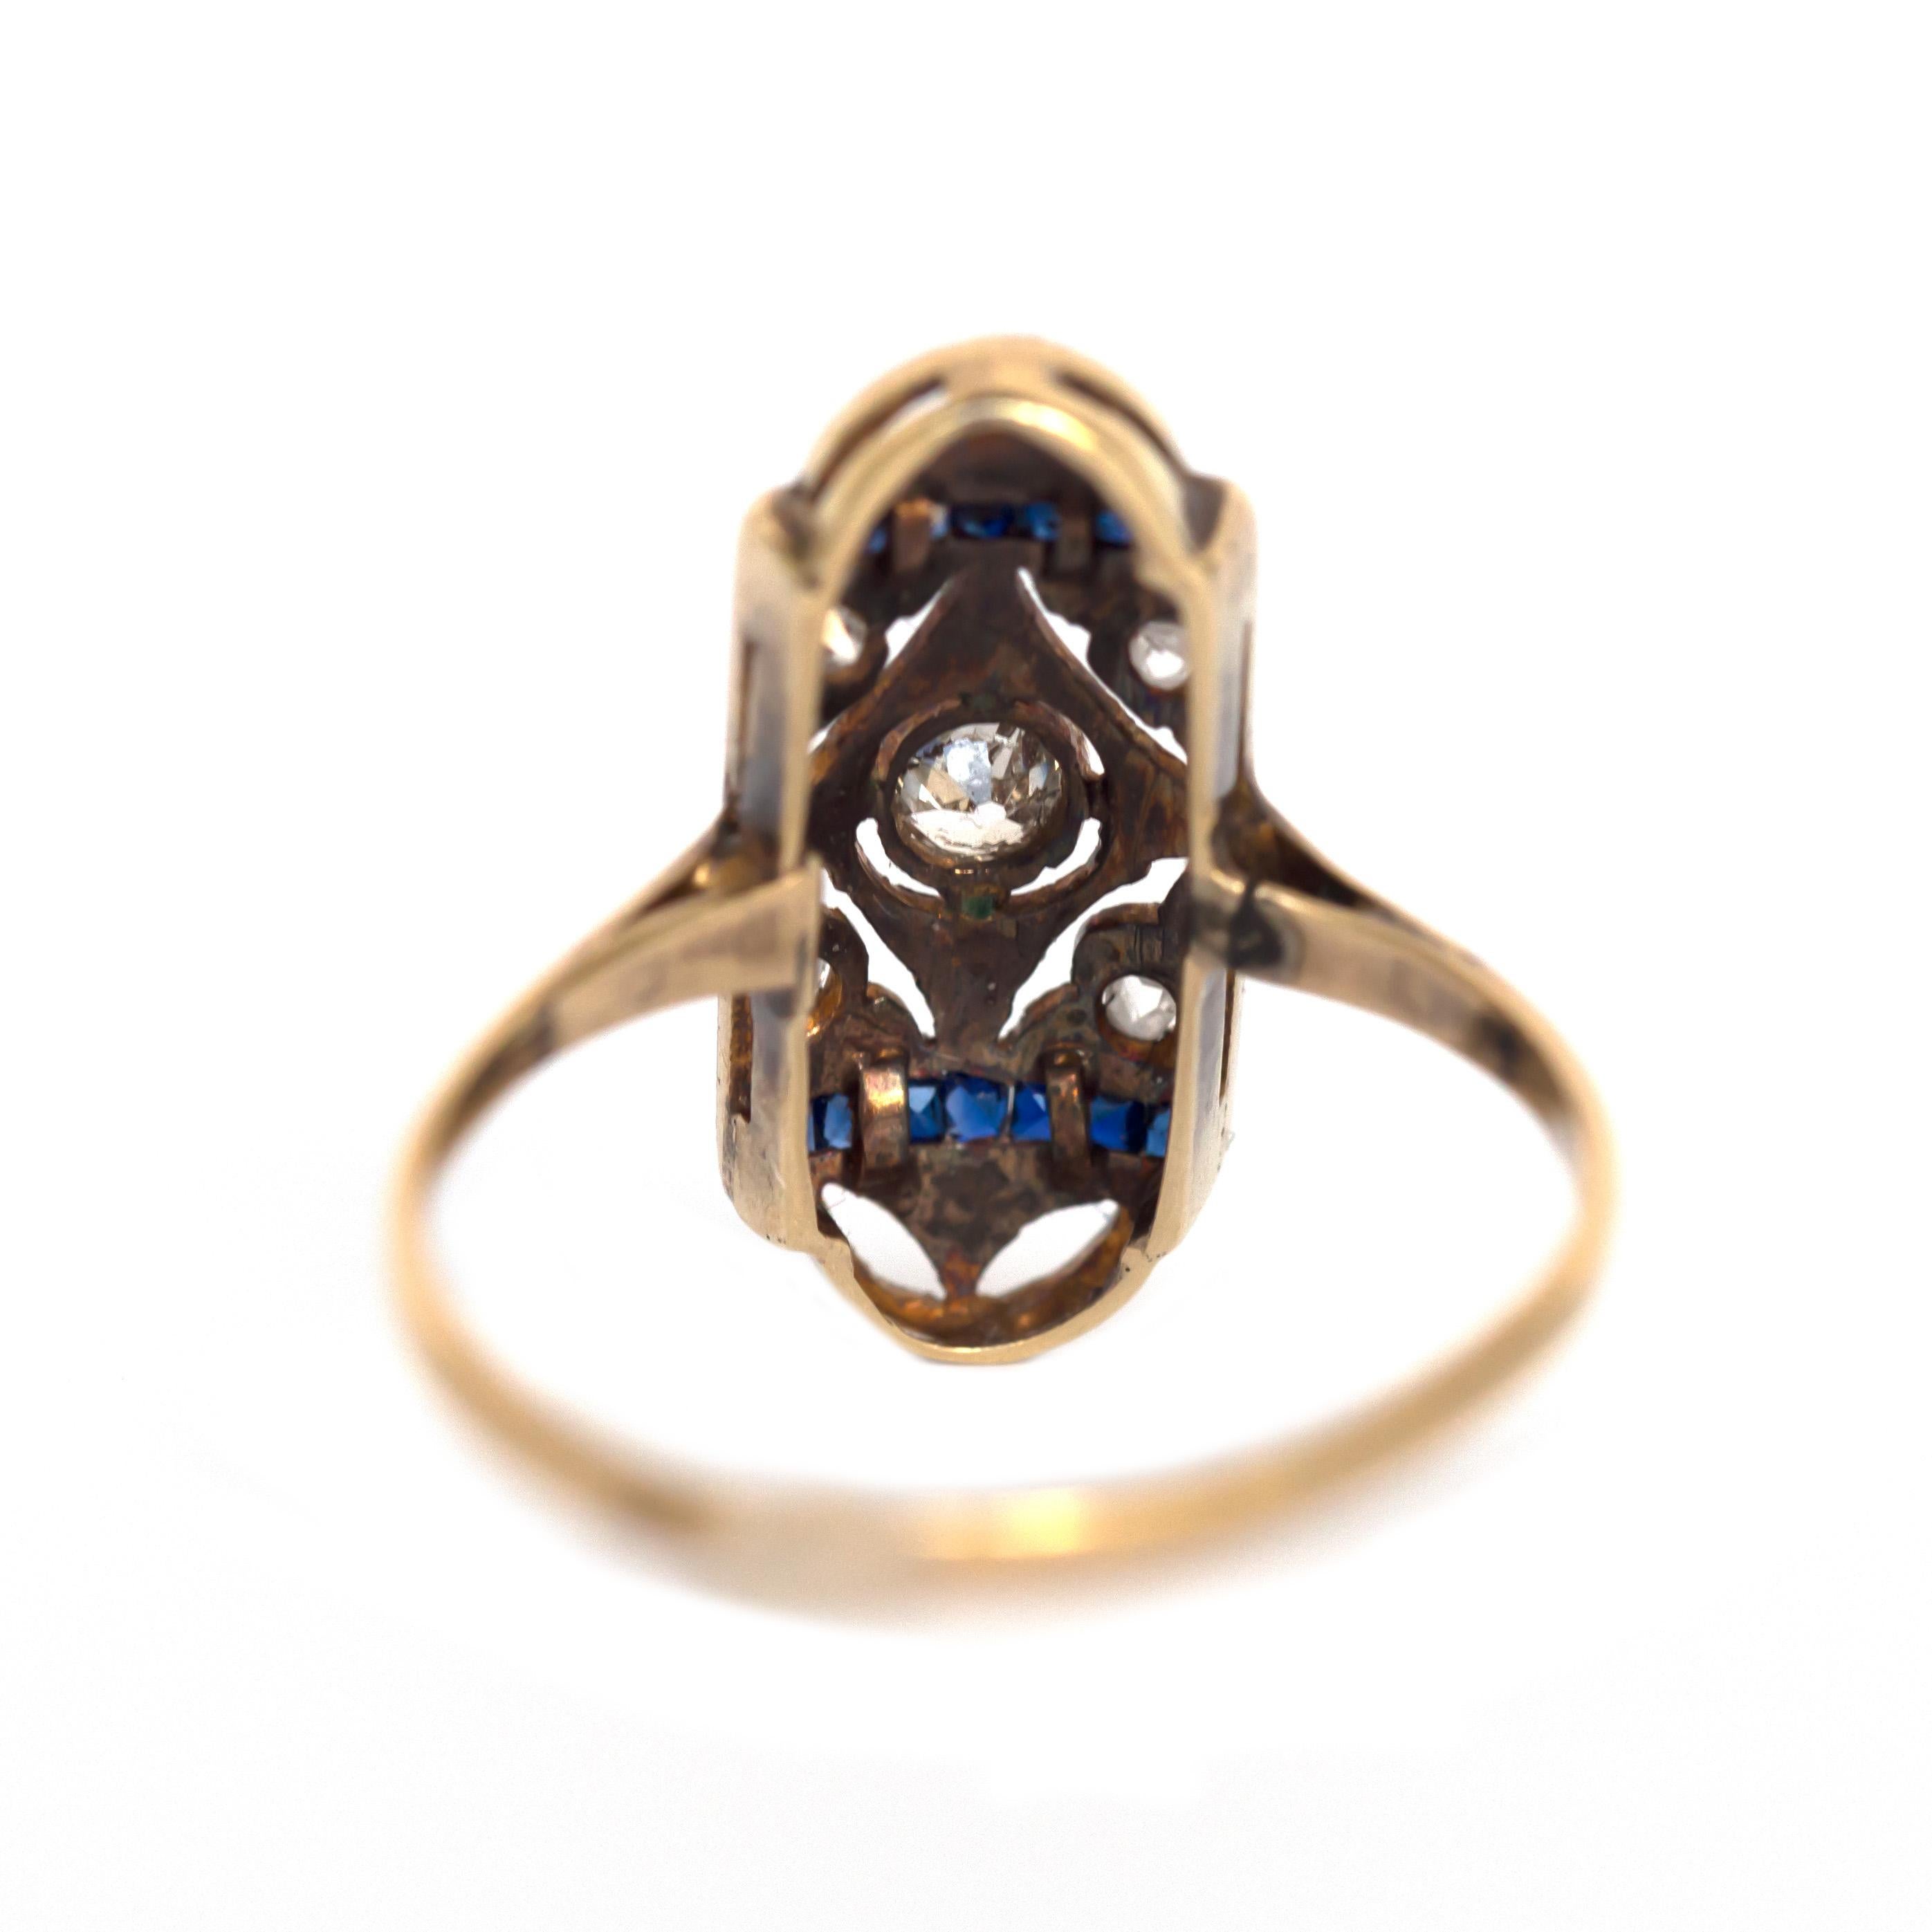 15 carat diamond ring for sale